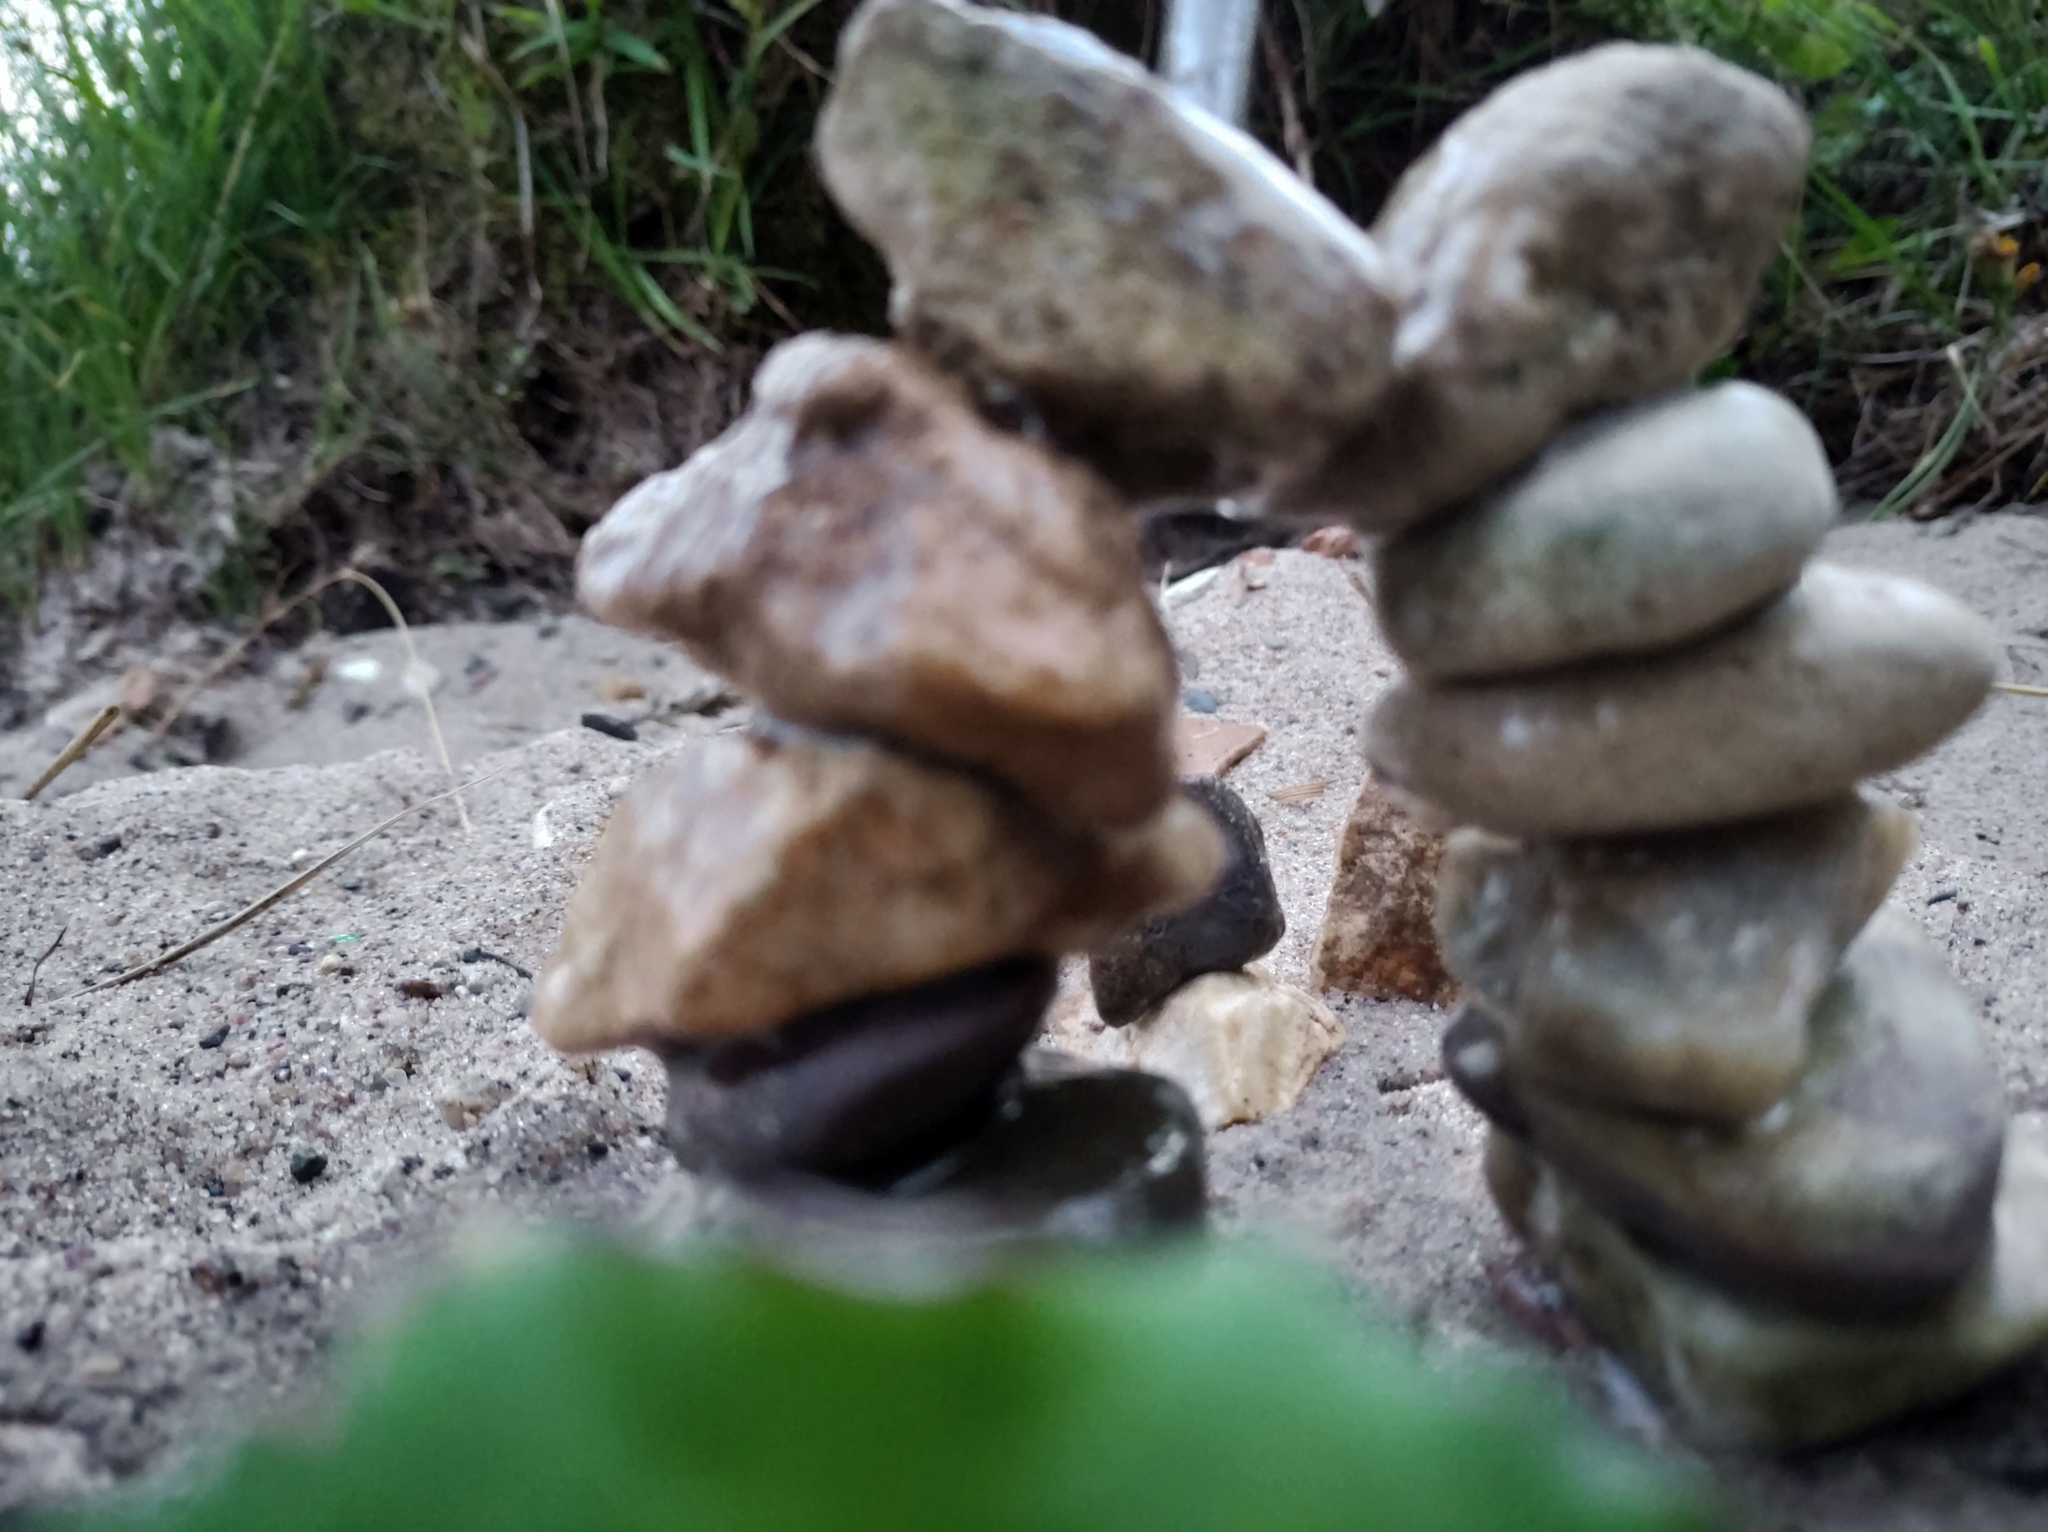 Pebbles Balance stones Hobby - My, A rock, Hobby, Natural stones, Longpost